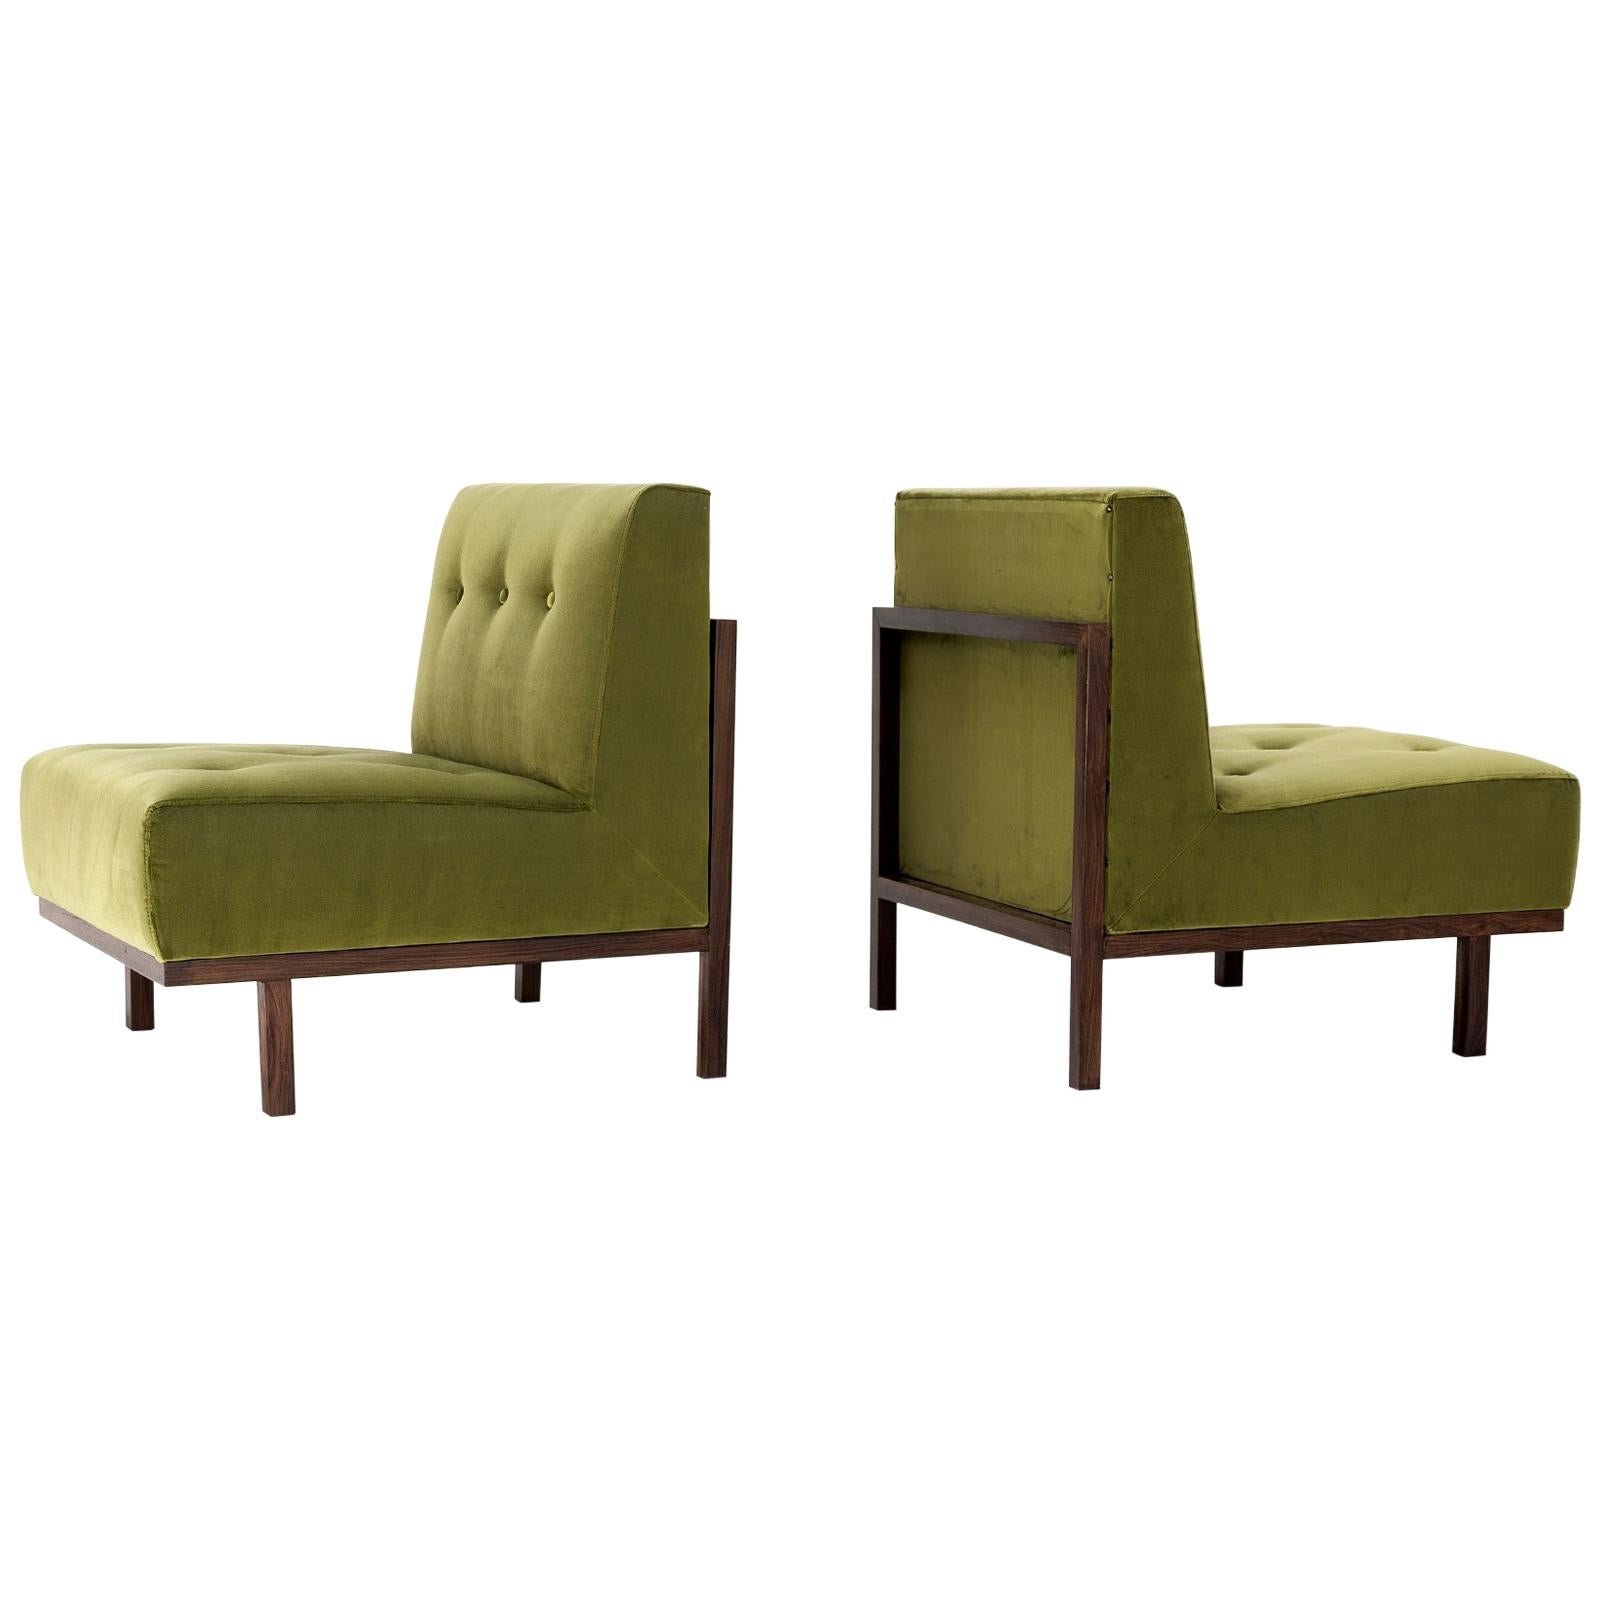 Branco & Preto Pair of Chairs “M1”, Jacaranda & Green Velvet, Brazil, 1950s